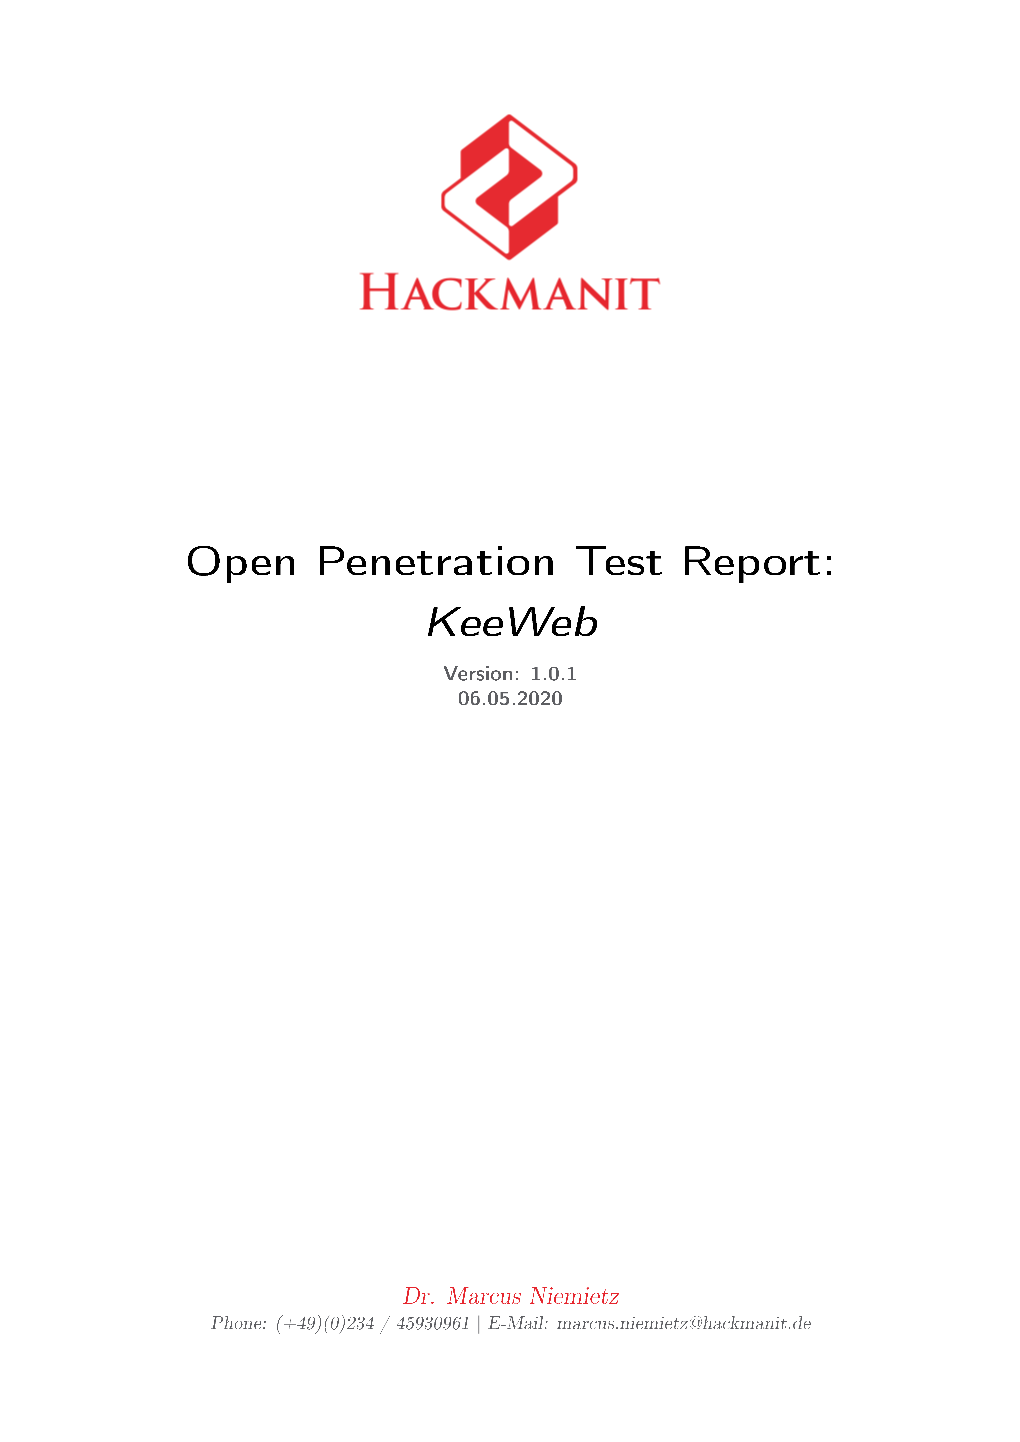 Keeweb Penetration Test Report